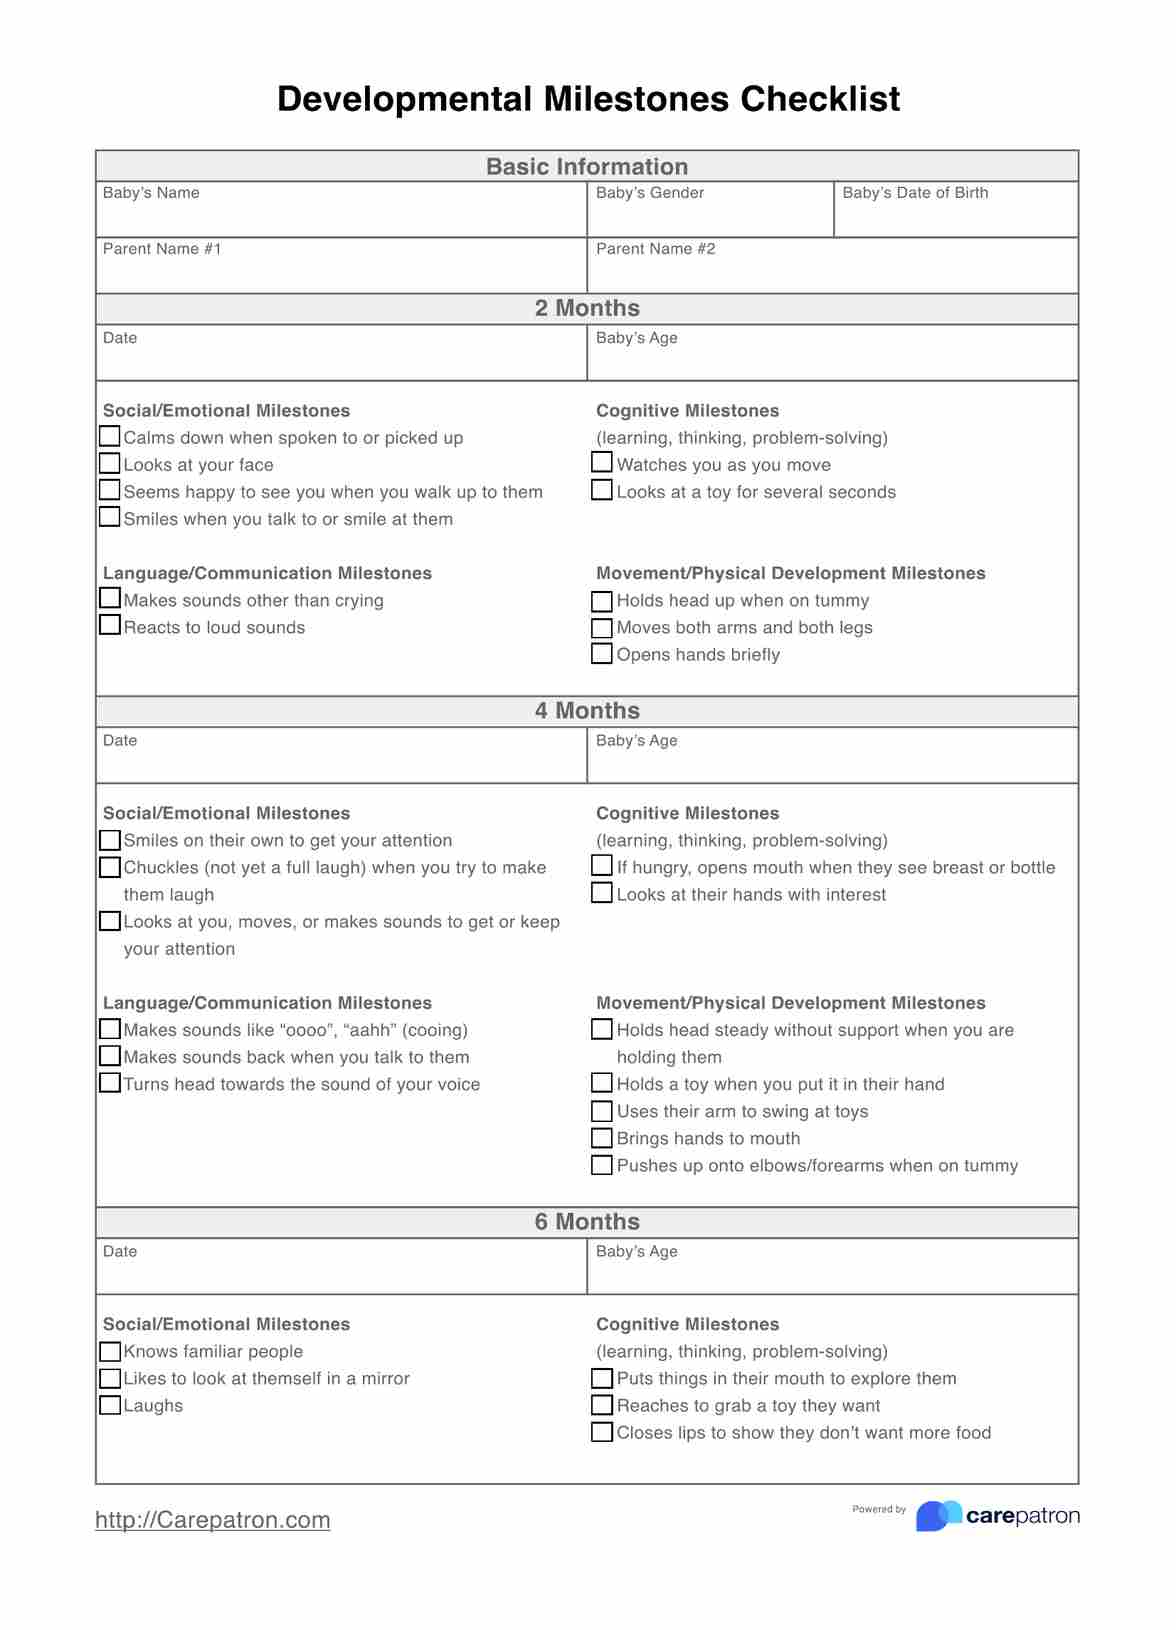 Developmental Milestones Checklist PDF Example